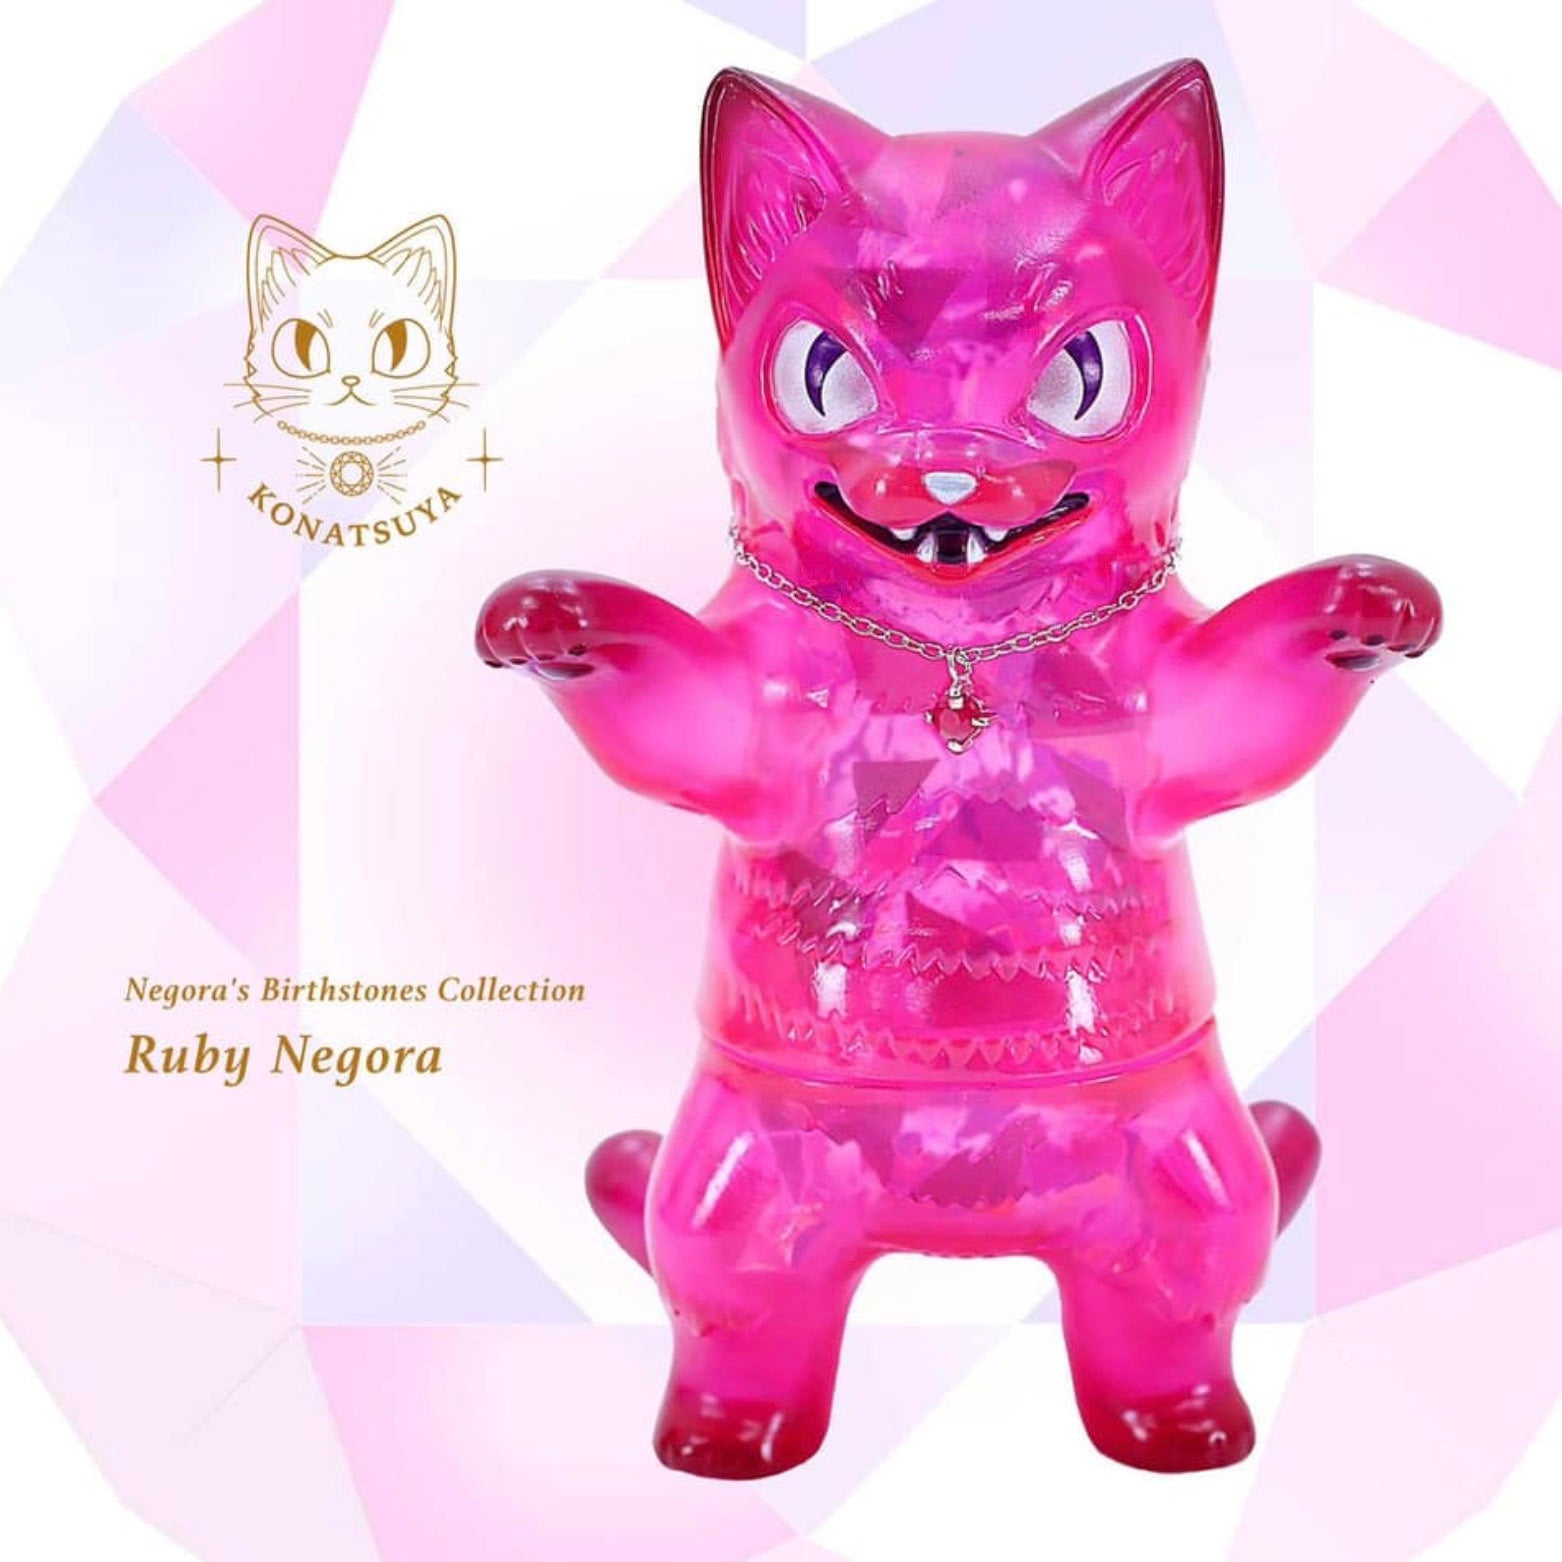 Negora Birthstone Collection (Ruby Version) Sofubi Art Toy by Konatsuya